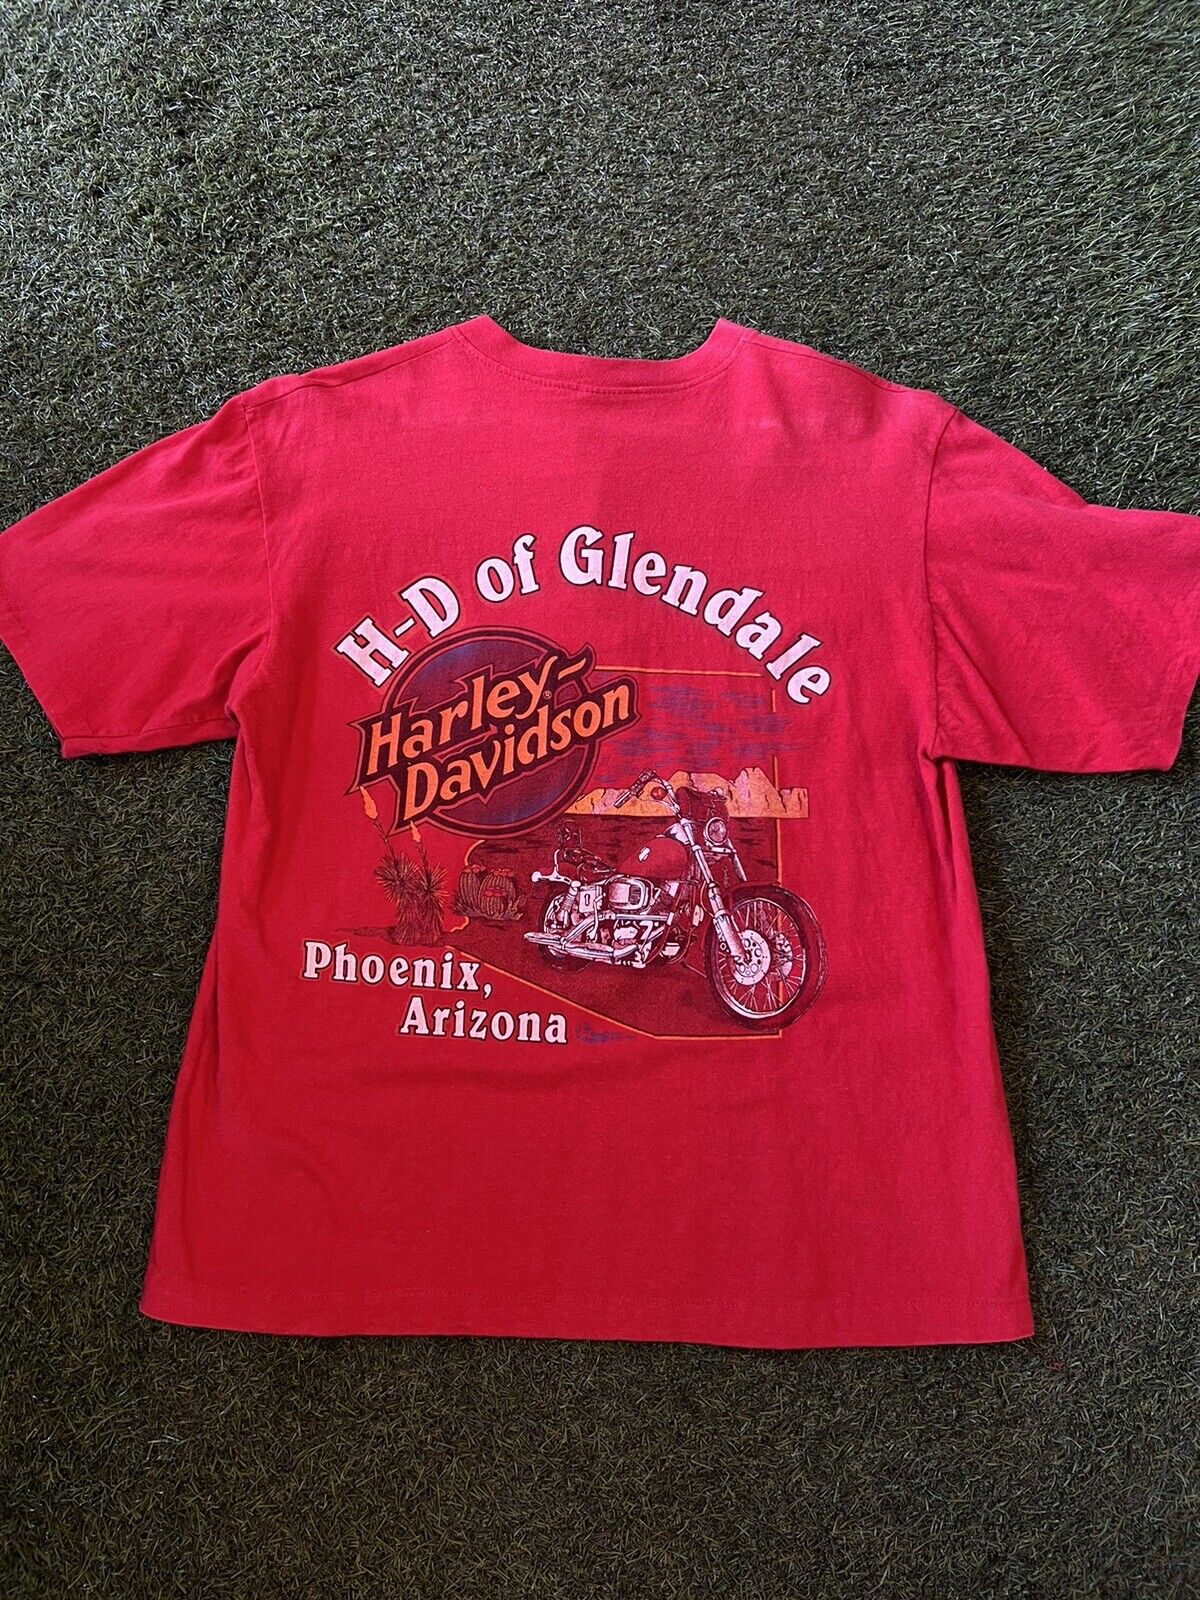 Vintage 1987 Harley Davidson shirt Glendale Phoenix Arizona VERY RARE